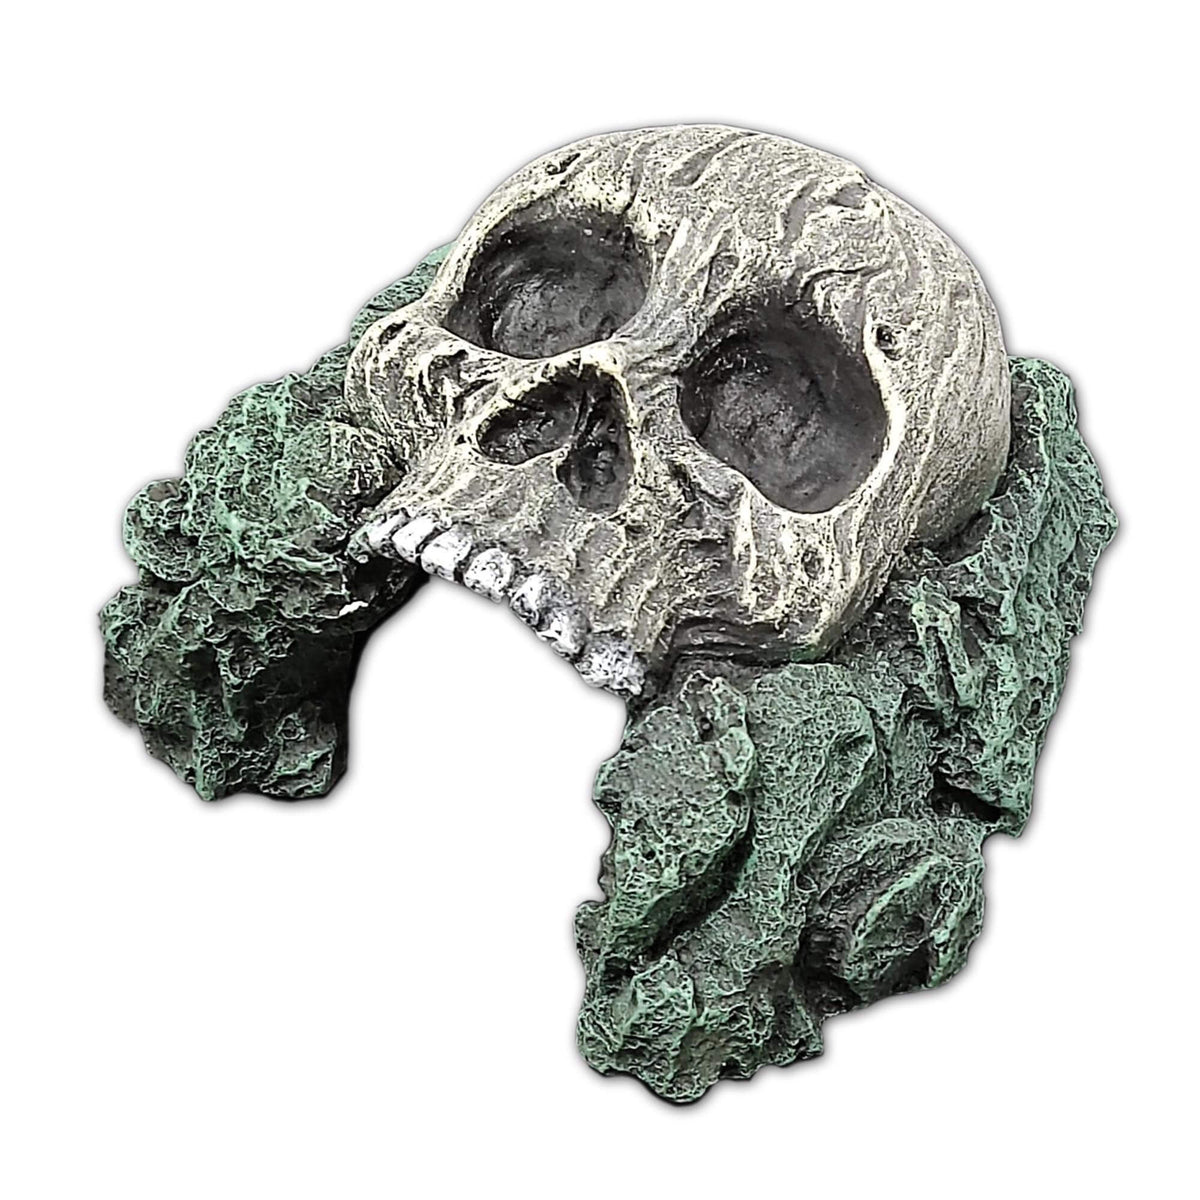 Human Skull Hide - 15.5 x 16 x 8.5cm